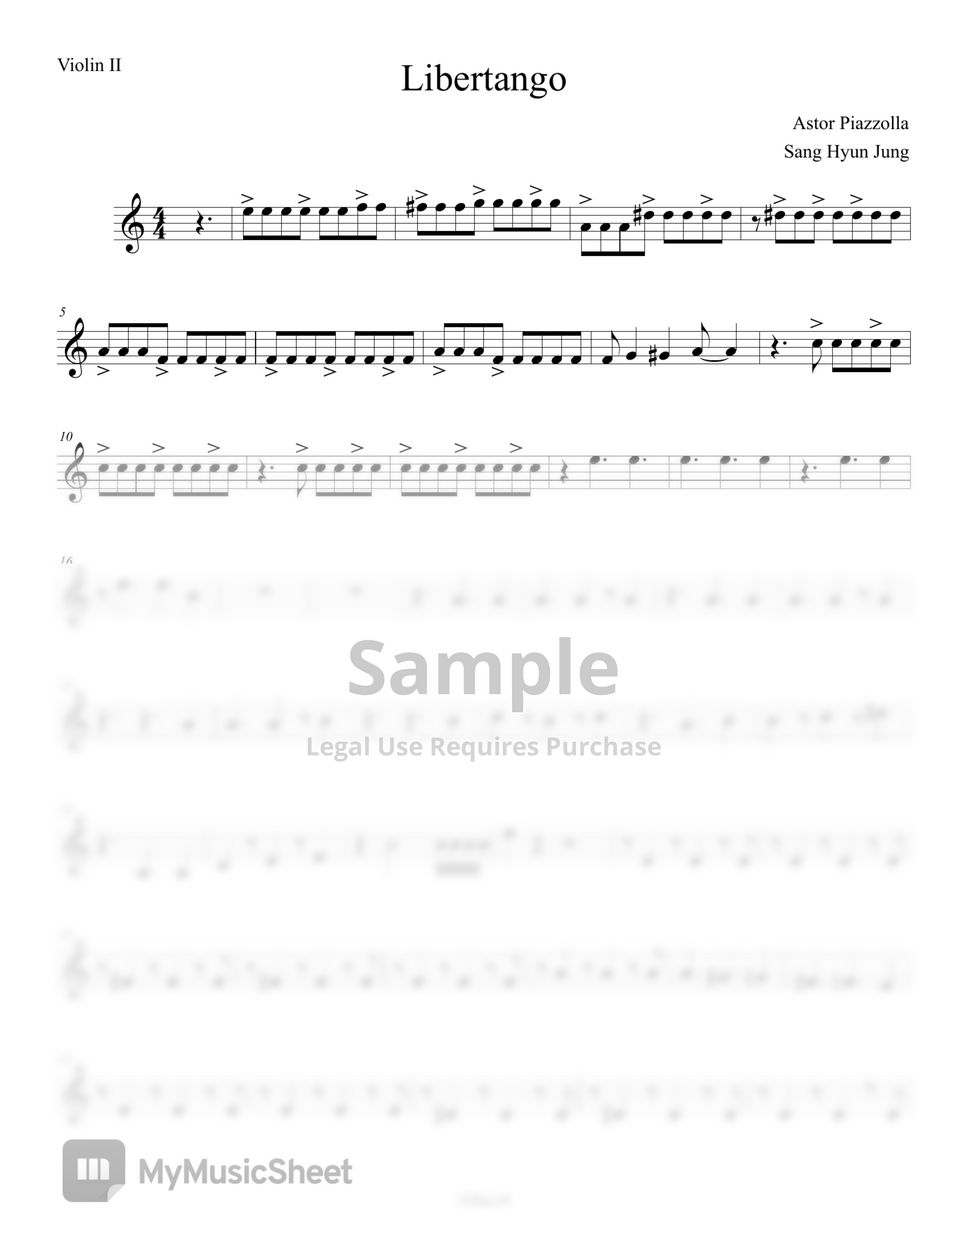 Astor Piazzolla - Libertango (Flute, Clarinet, String Quintet) by sanghyeon